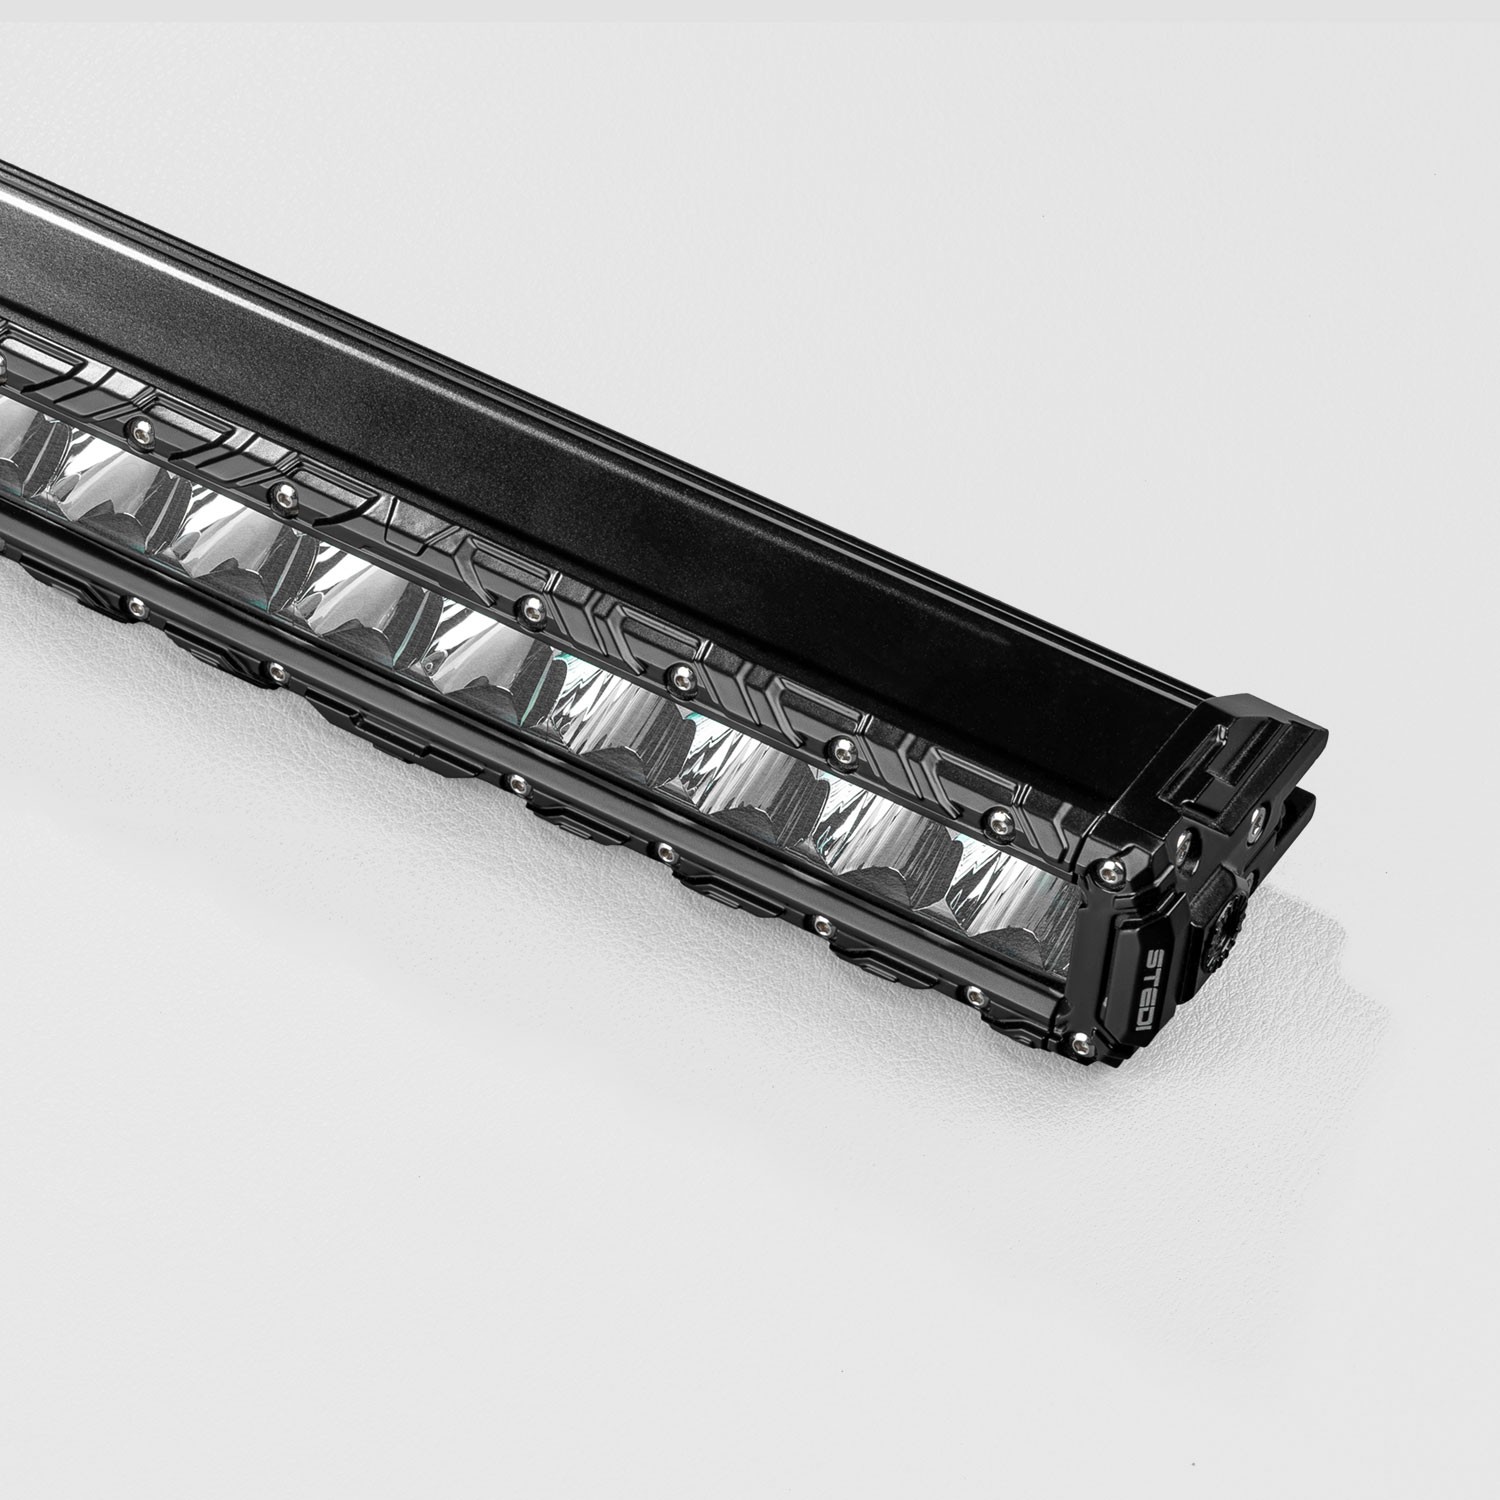  ST3K 31.5 inch 30 LED Slim LED Light Bar